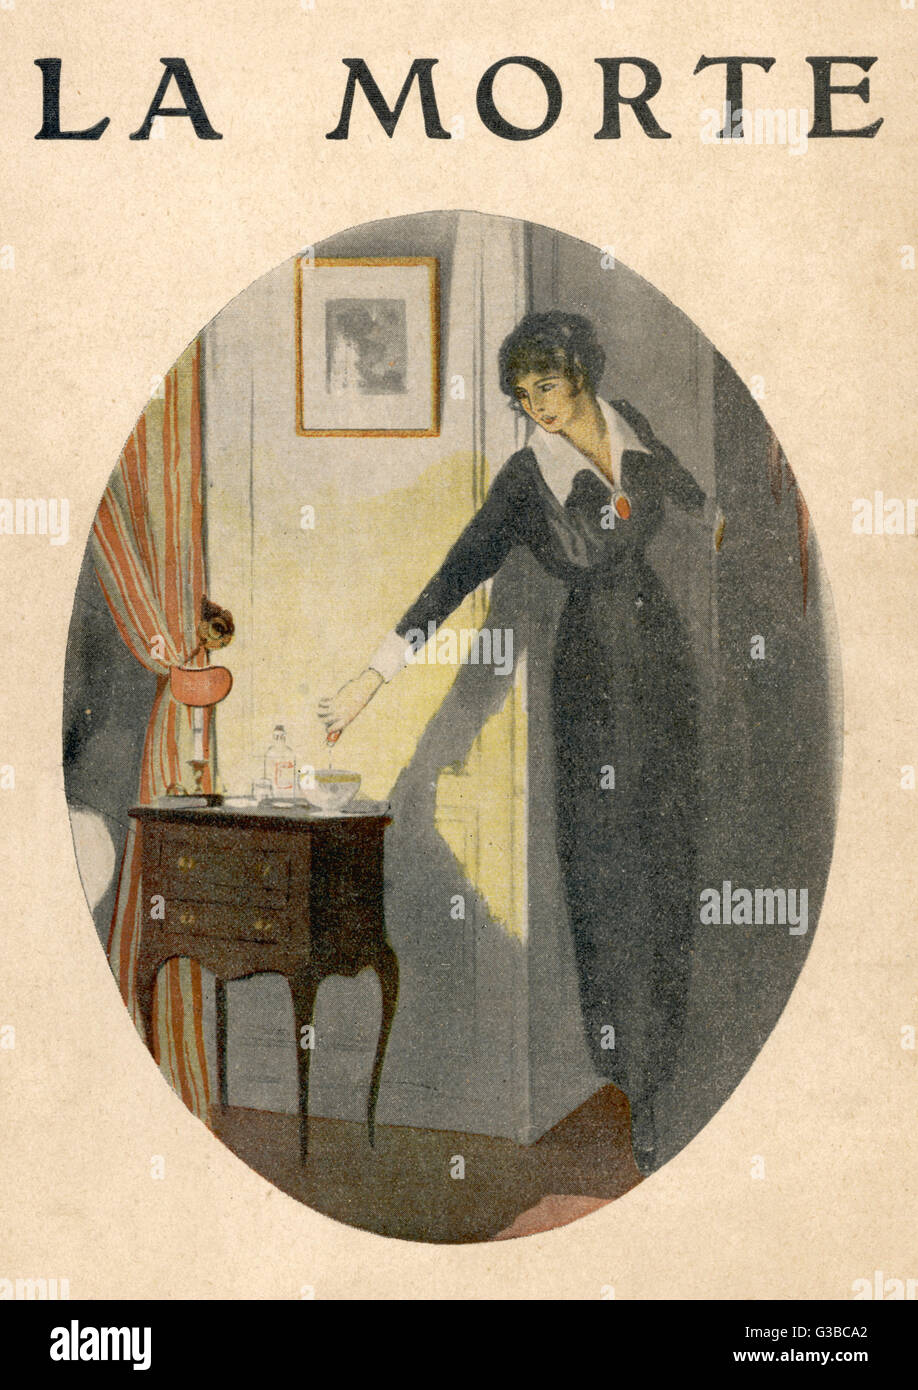 Murder - Poison - Woman - 1910 Stock Photo